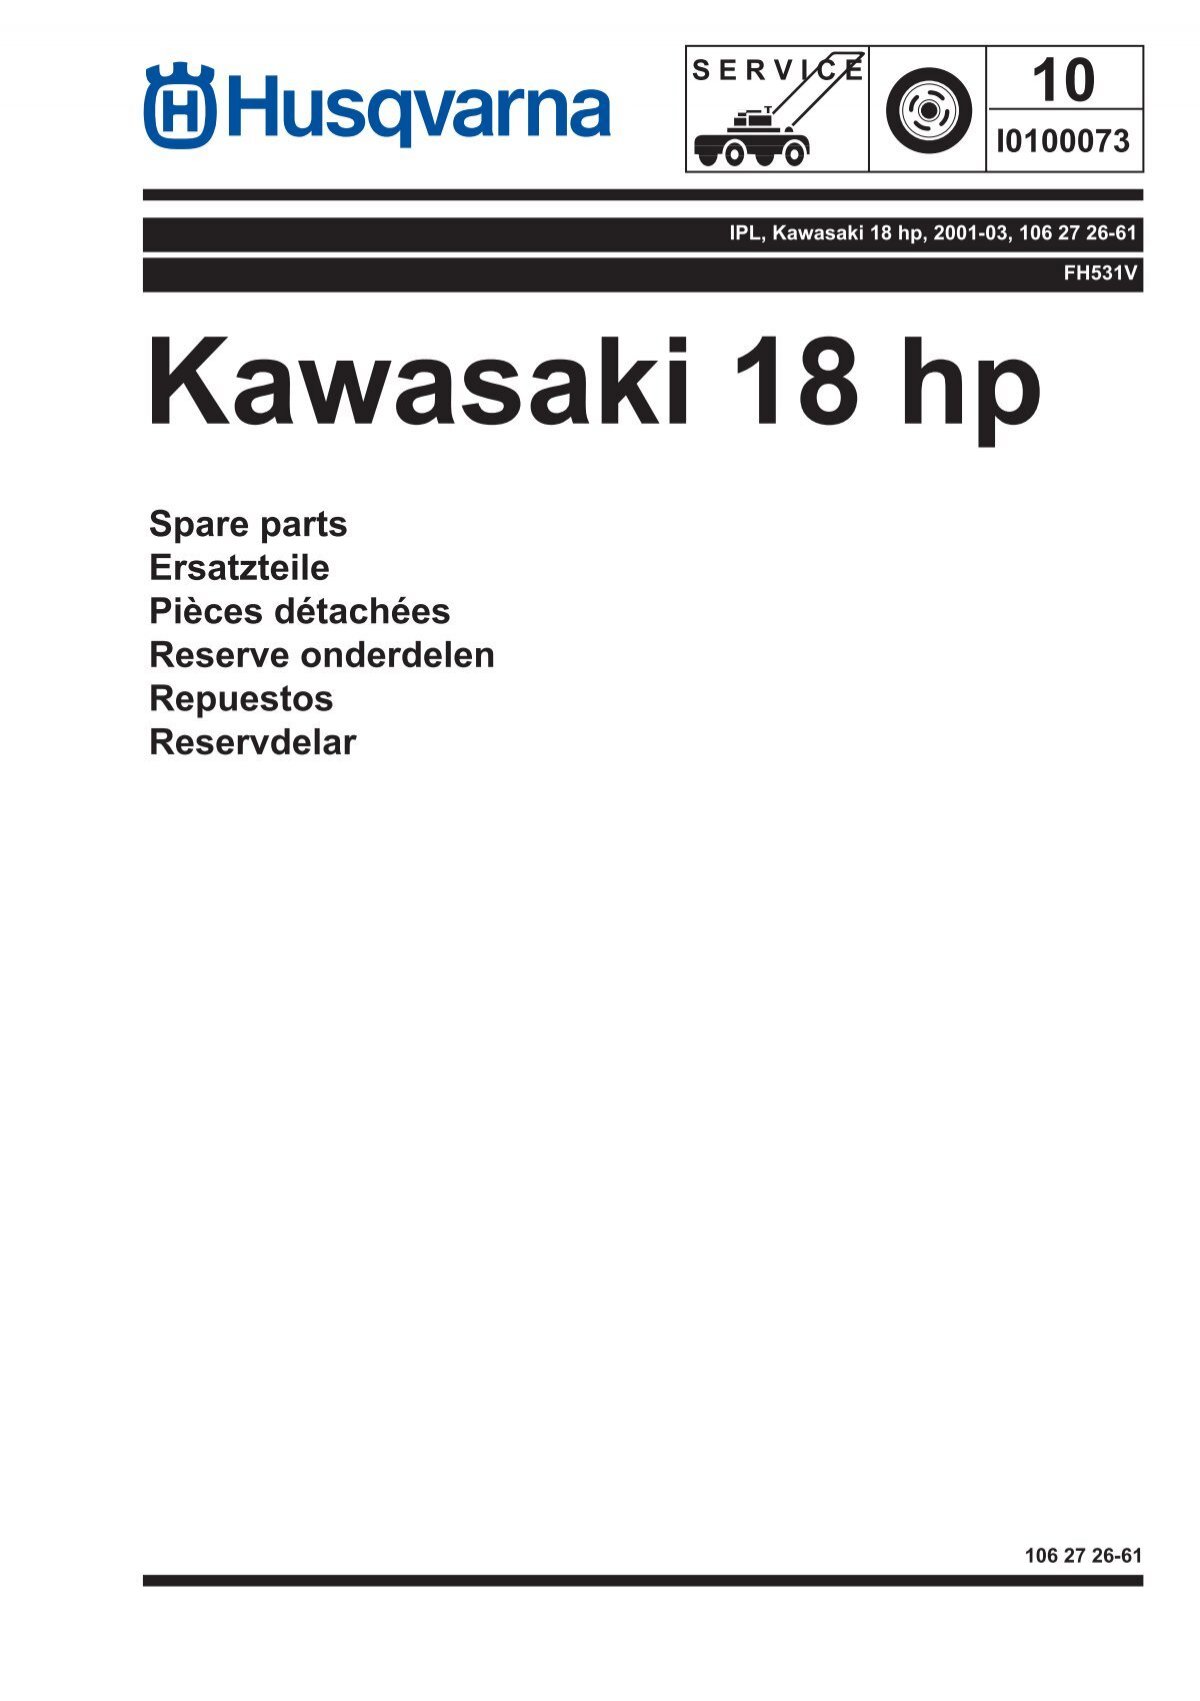 IPL, Kawasaki 18 hp, FH531V, 2001-03, - Husqvarna